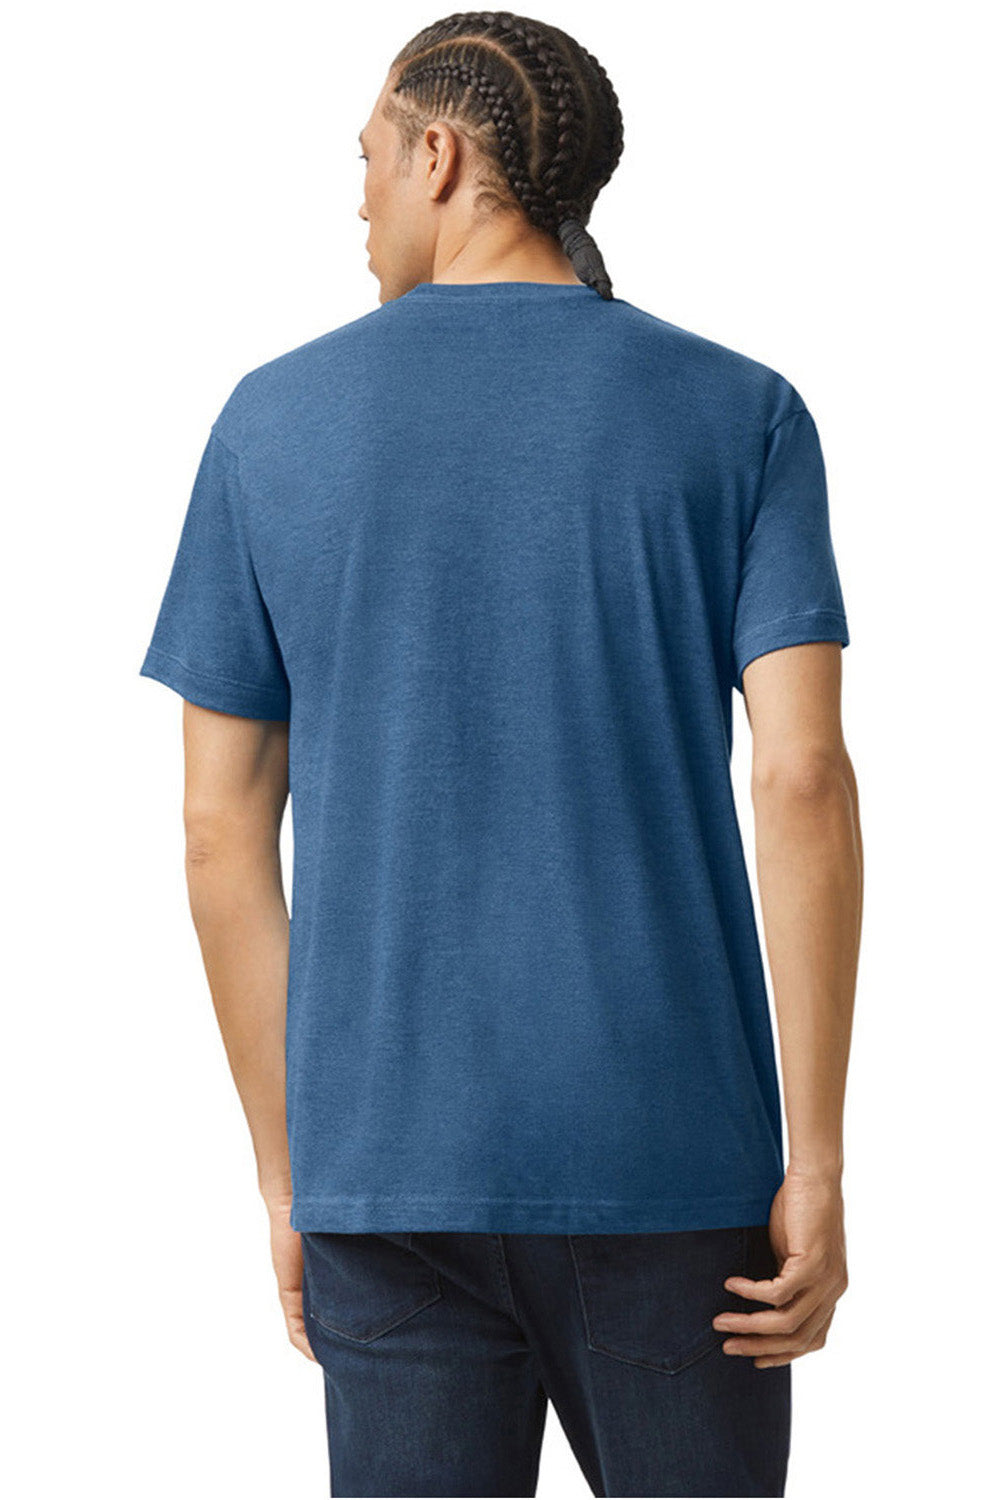 American Apparel TR401 Mens Track Short Sleeve Crewneck T-Shirt Dusk Blue Model Back